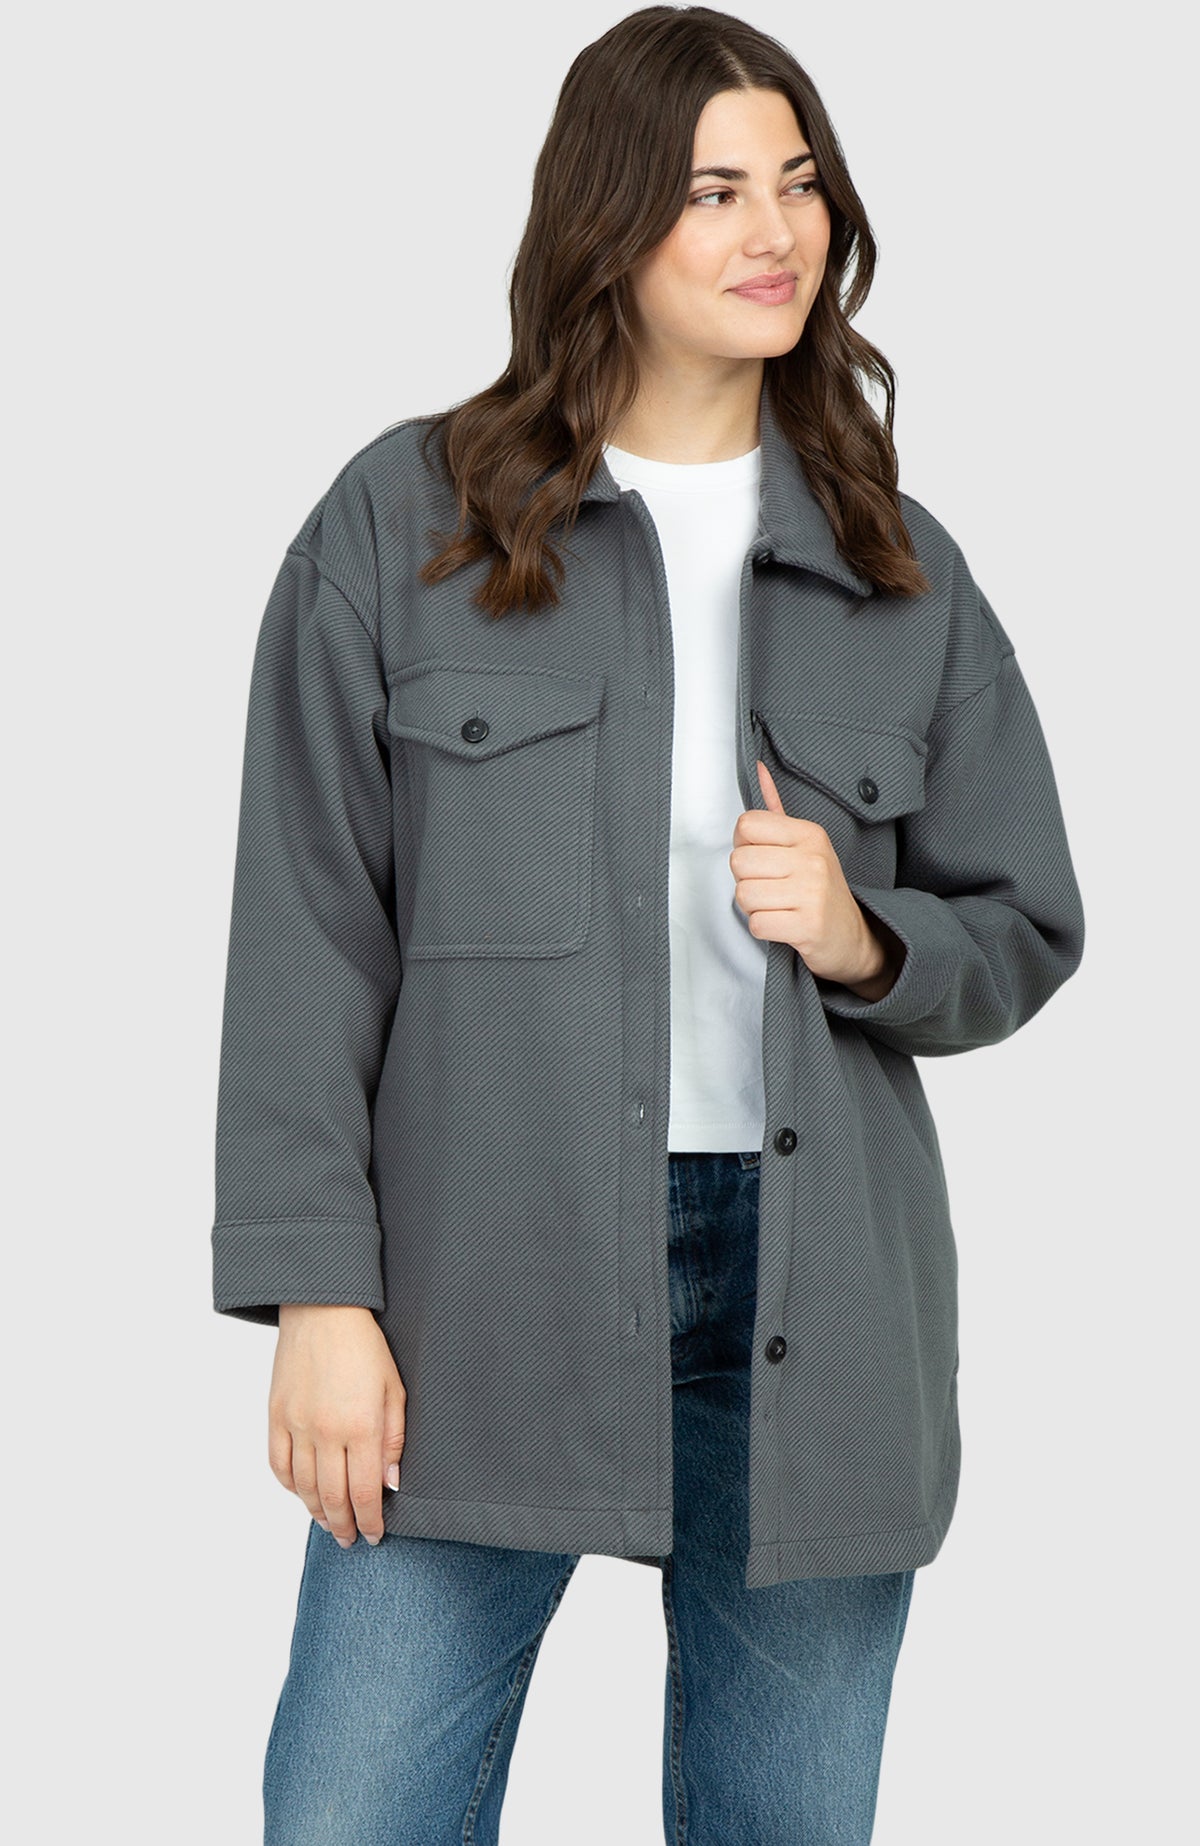 Slate Grey Oversized Twill Knit Shacket for Women - Front